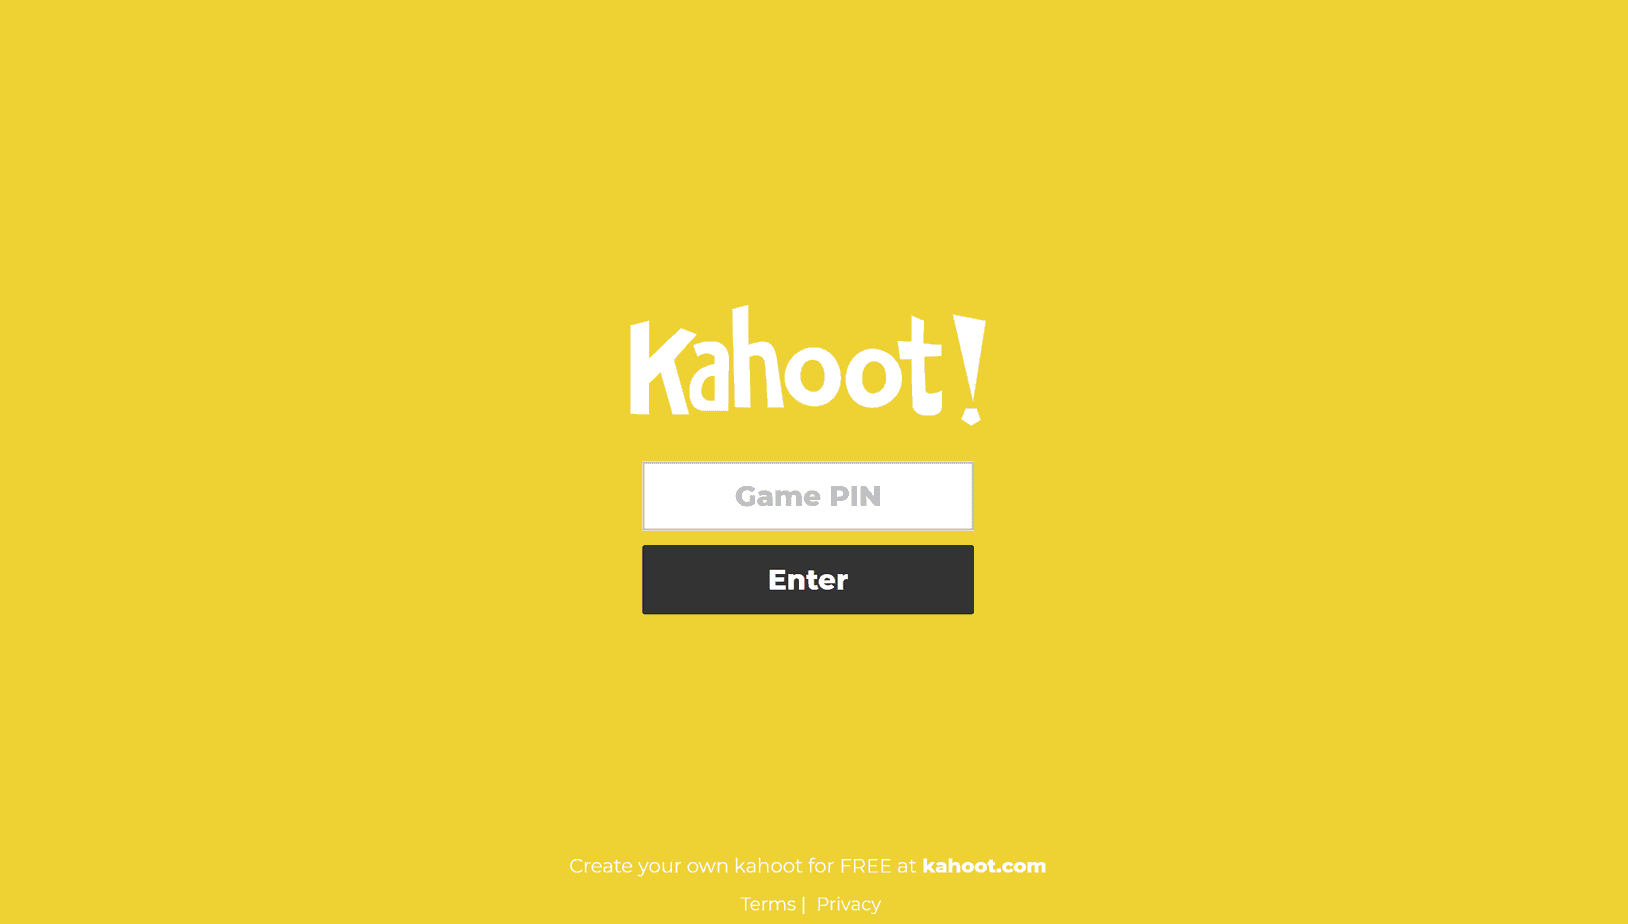 30 Best List Of Kahoot Game Pins That Always Work In 2021